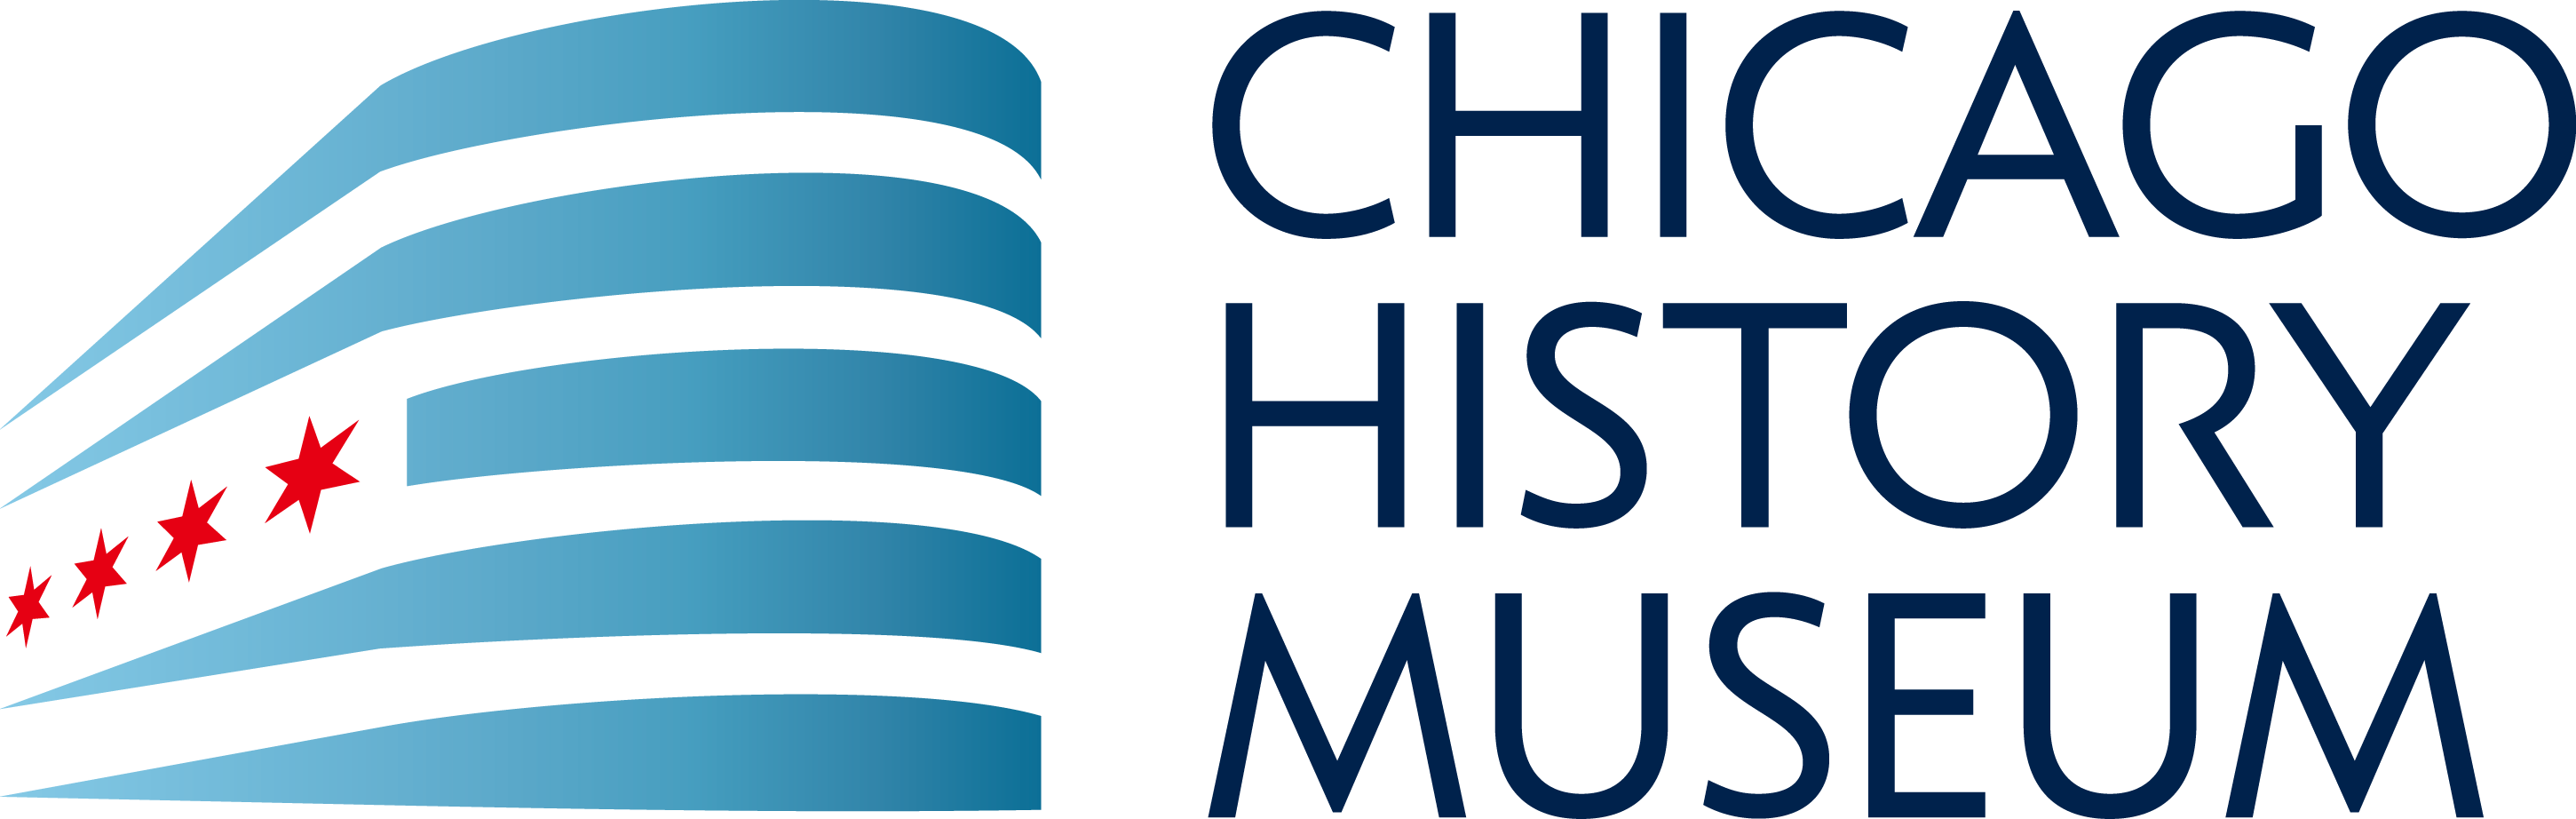 chicago history museum logo